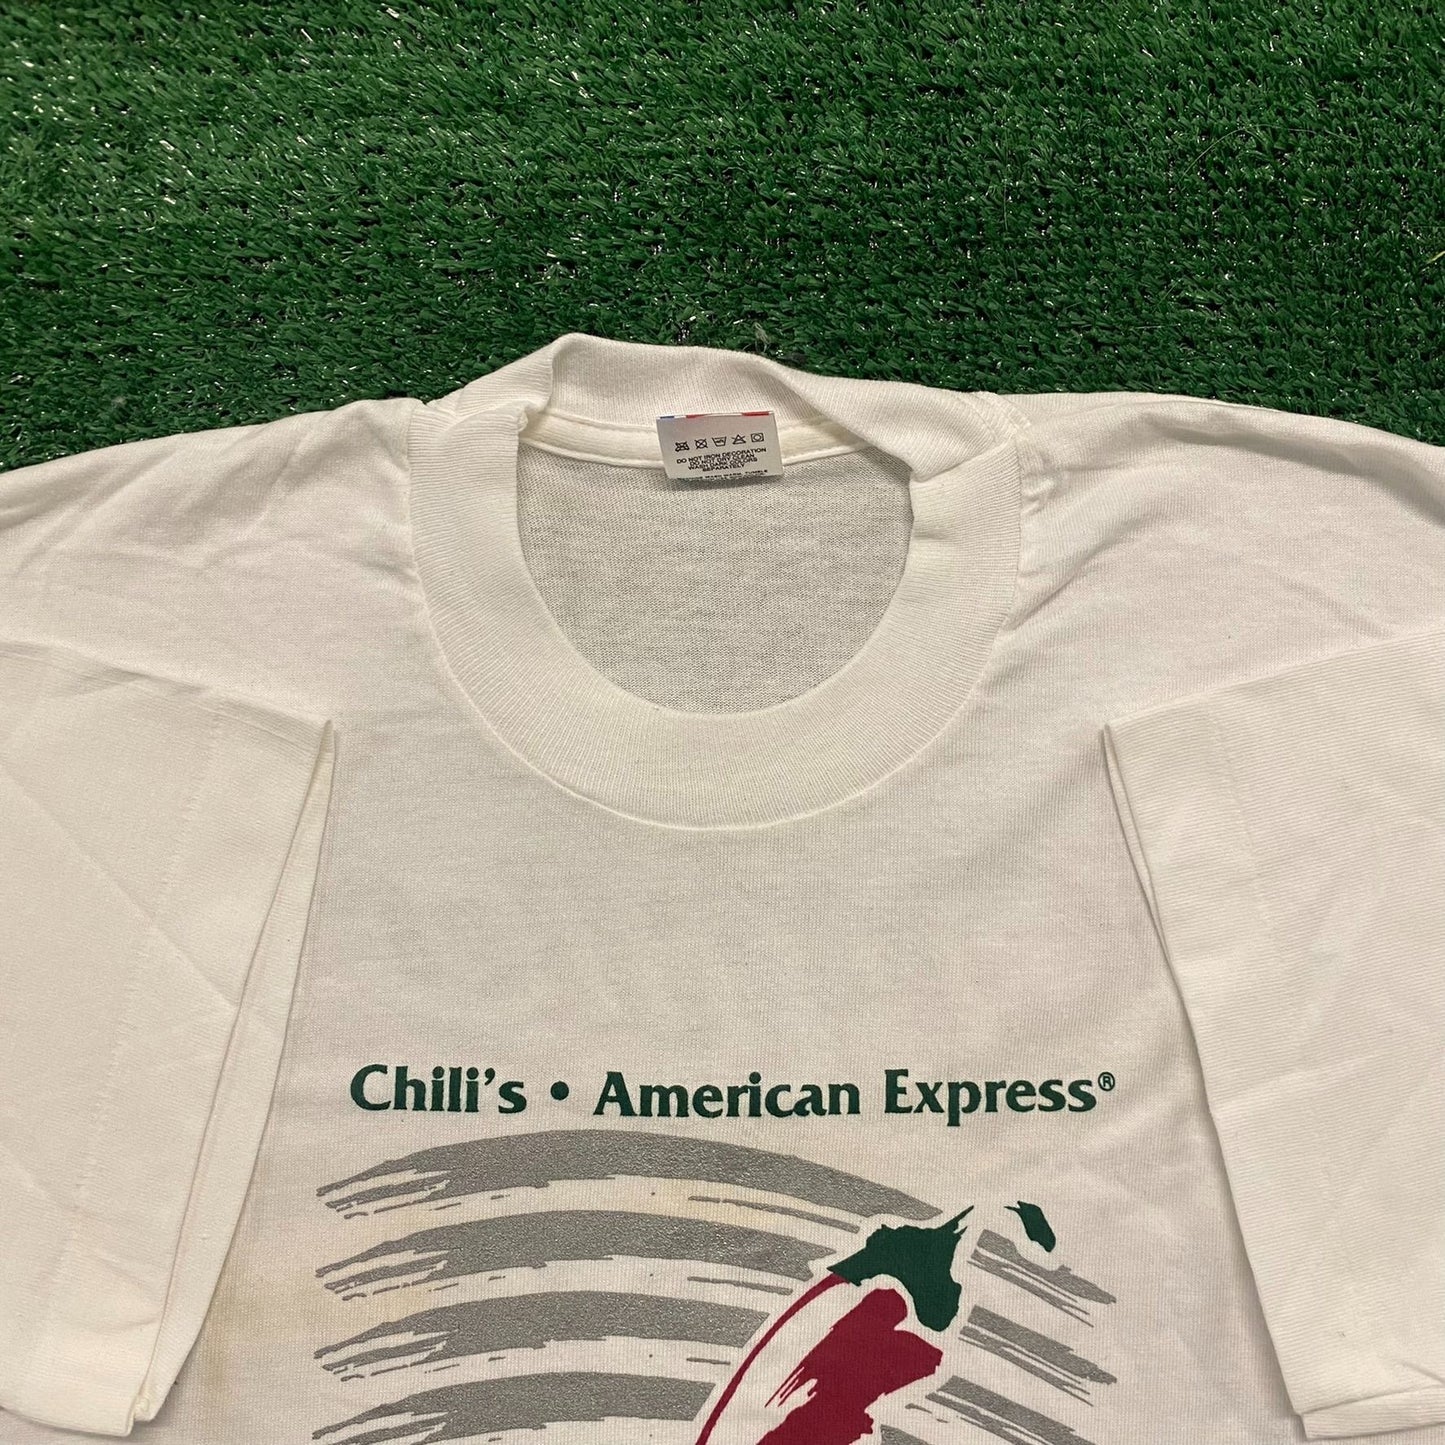 Charity Chili Pepper Run 1994 Vintage 90s Running T-Shirt